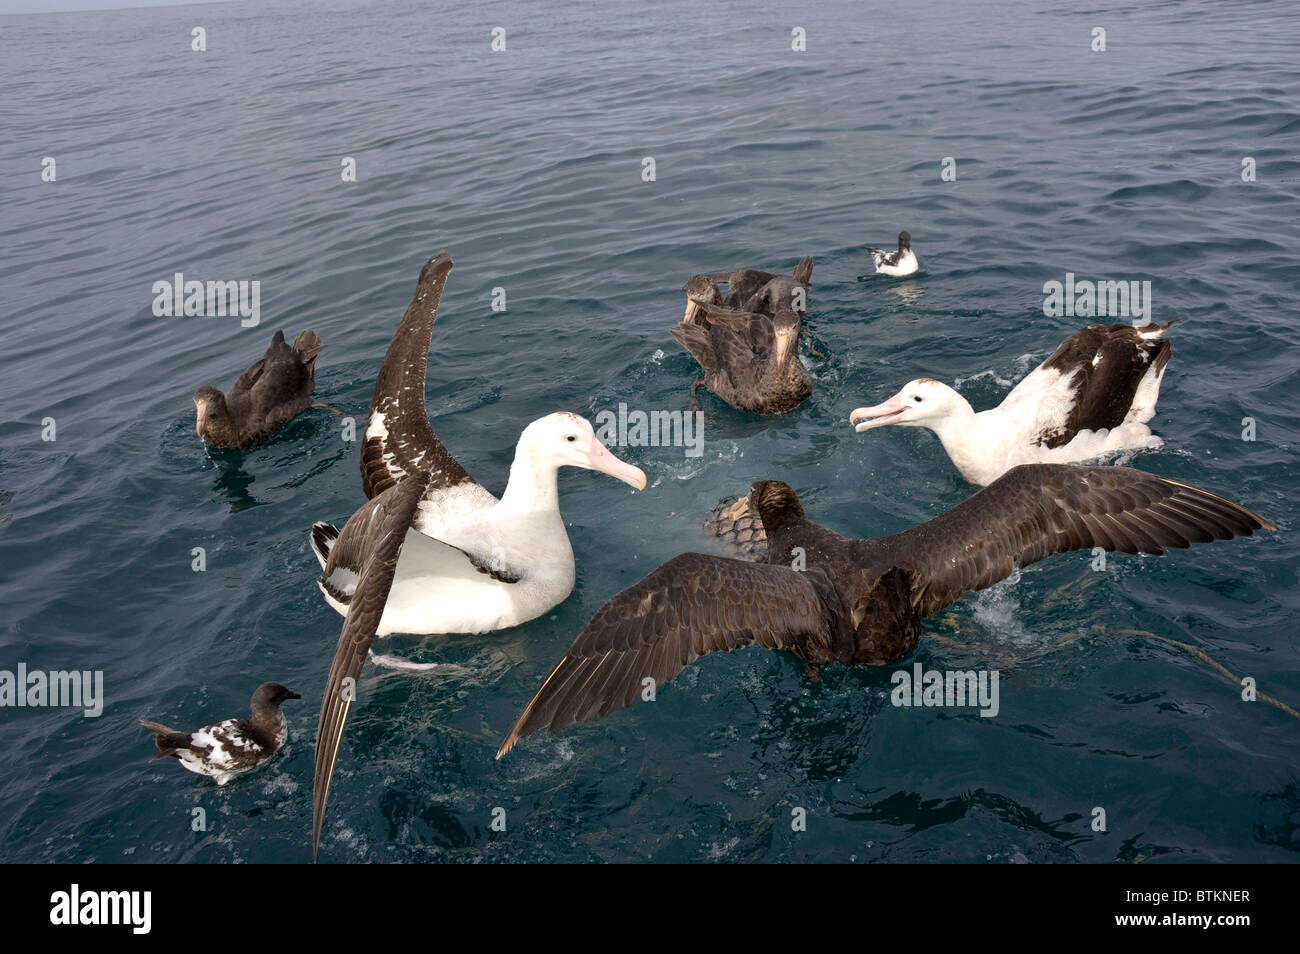 Nueva Zelandia, S Island, Kaikoura, pelagic birding trip, petreles gigantes del sur & albatros errante Foto de stock